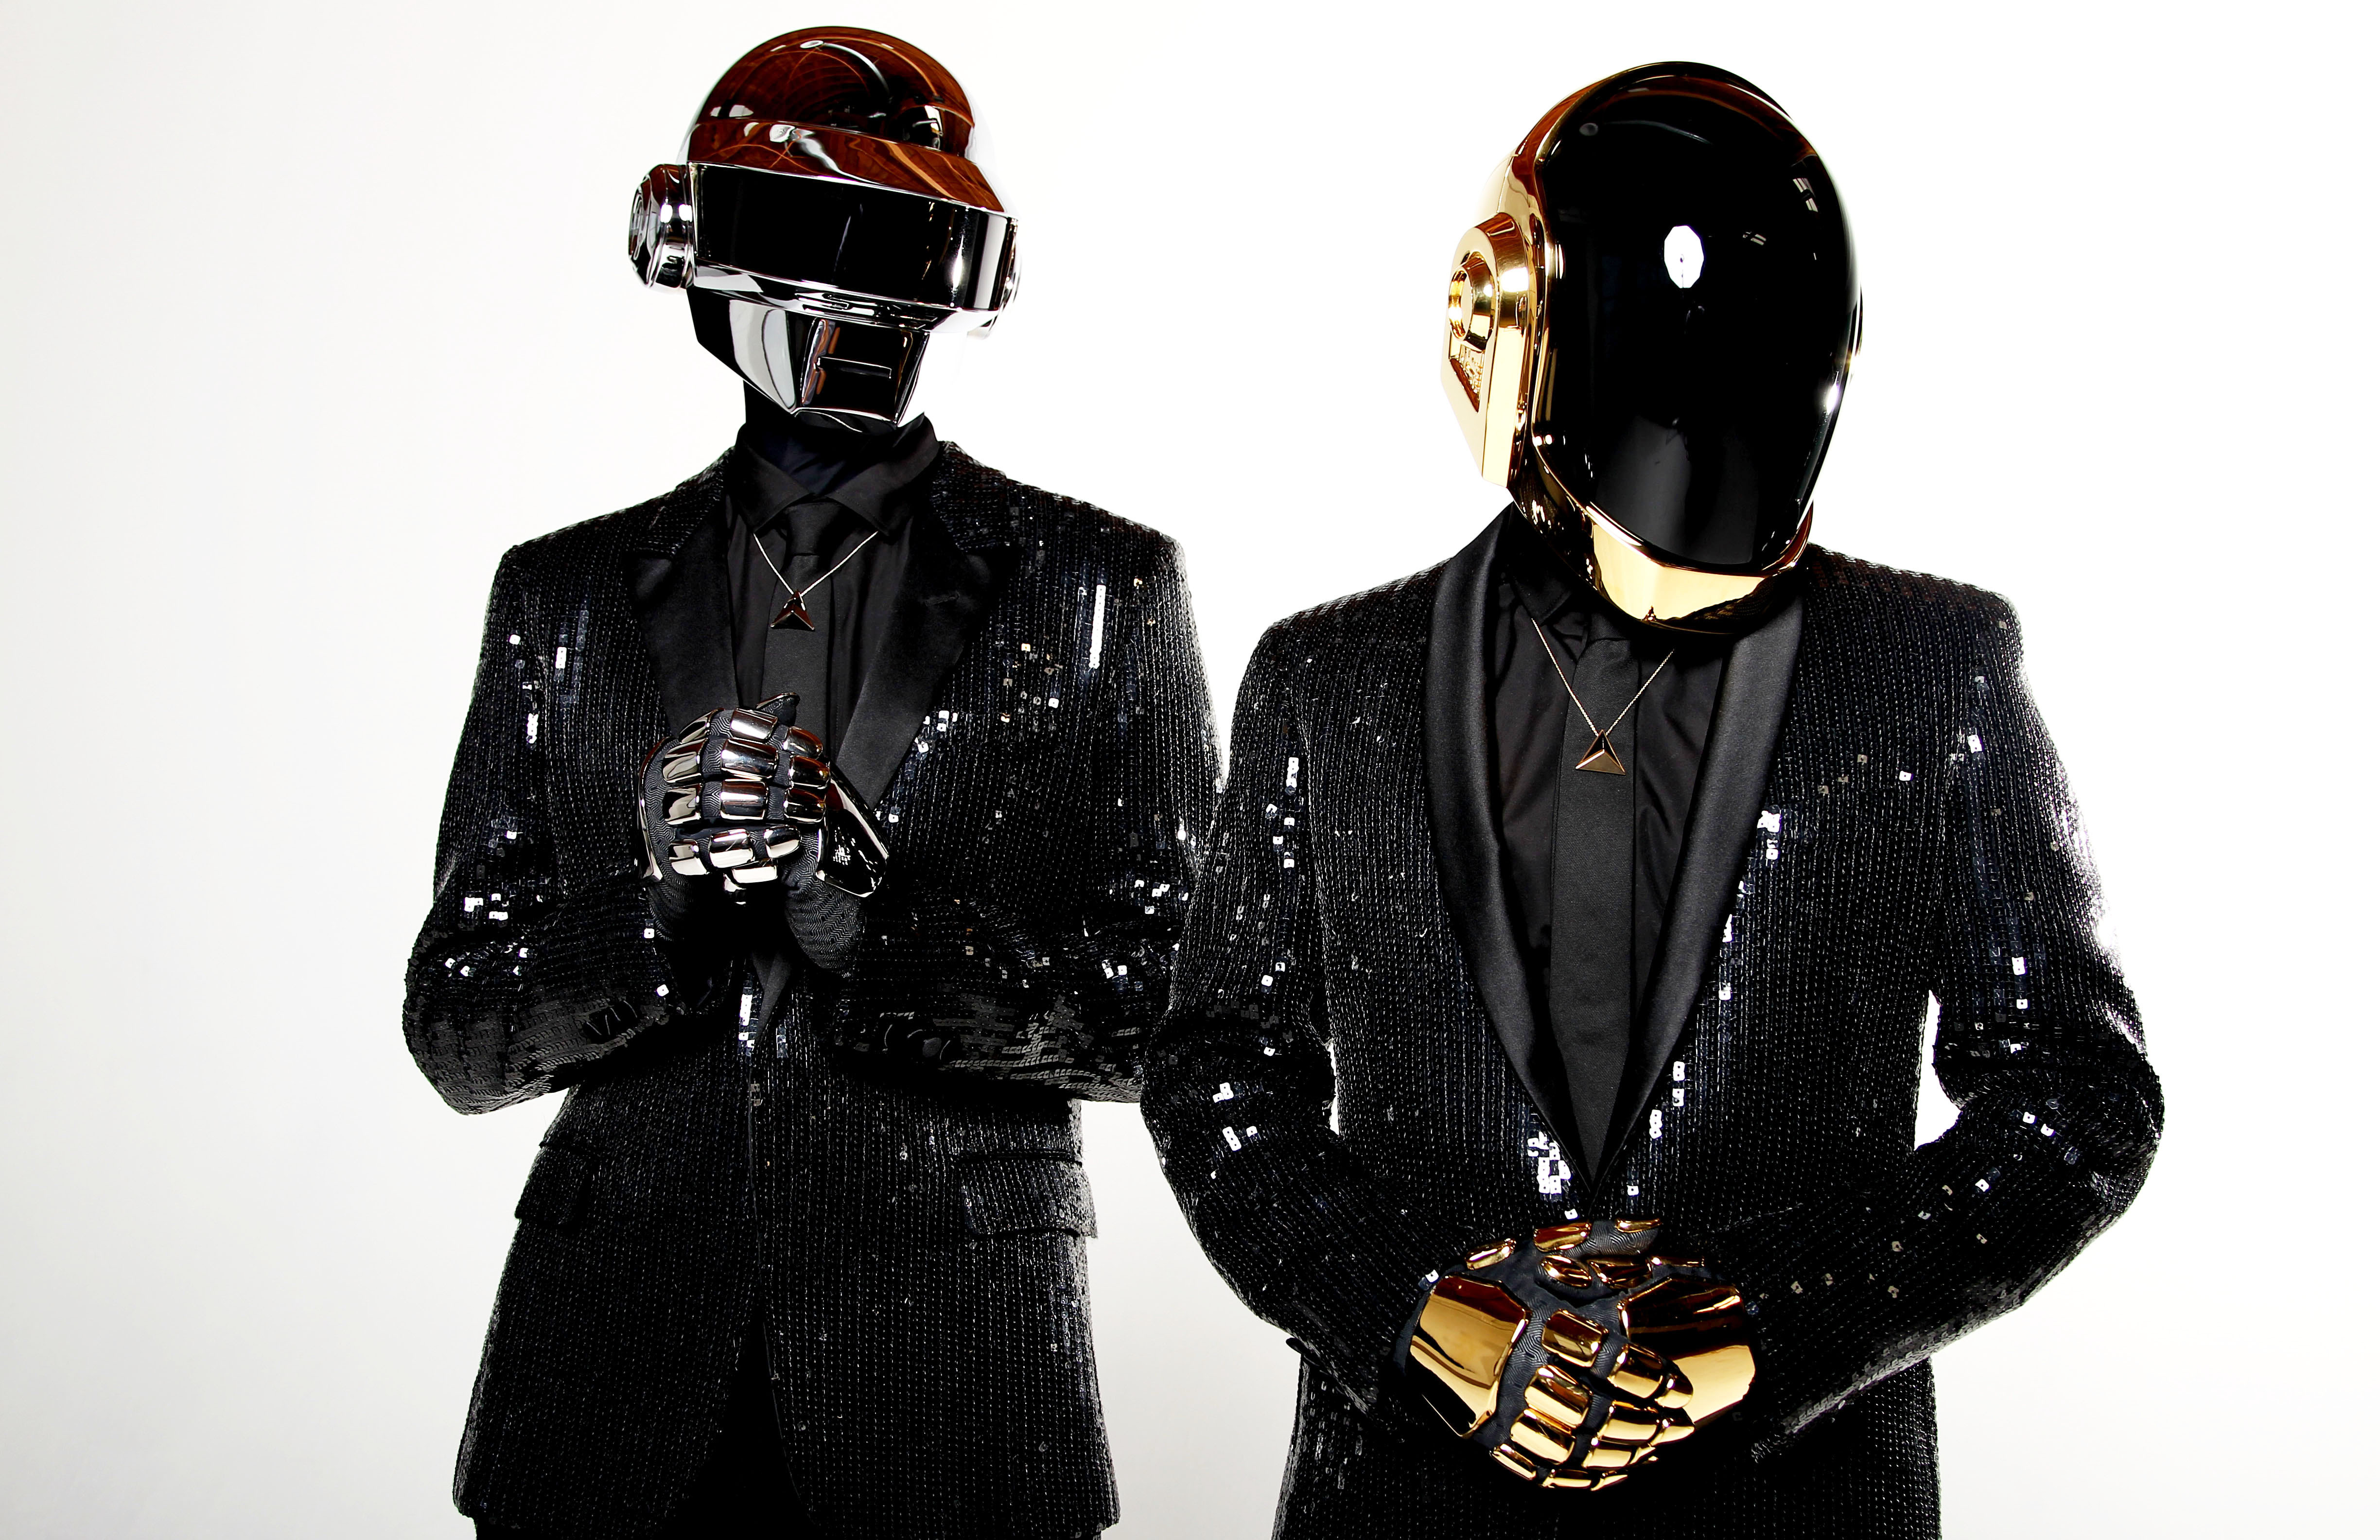 Daft Punk pose for a portrait